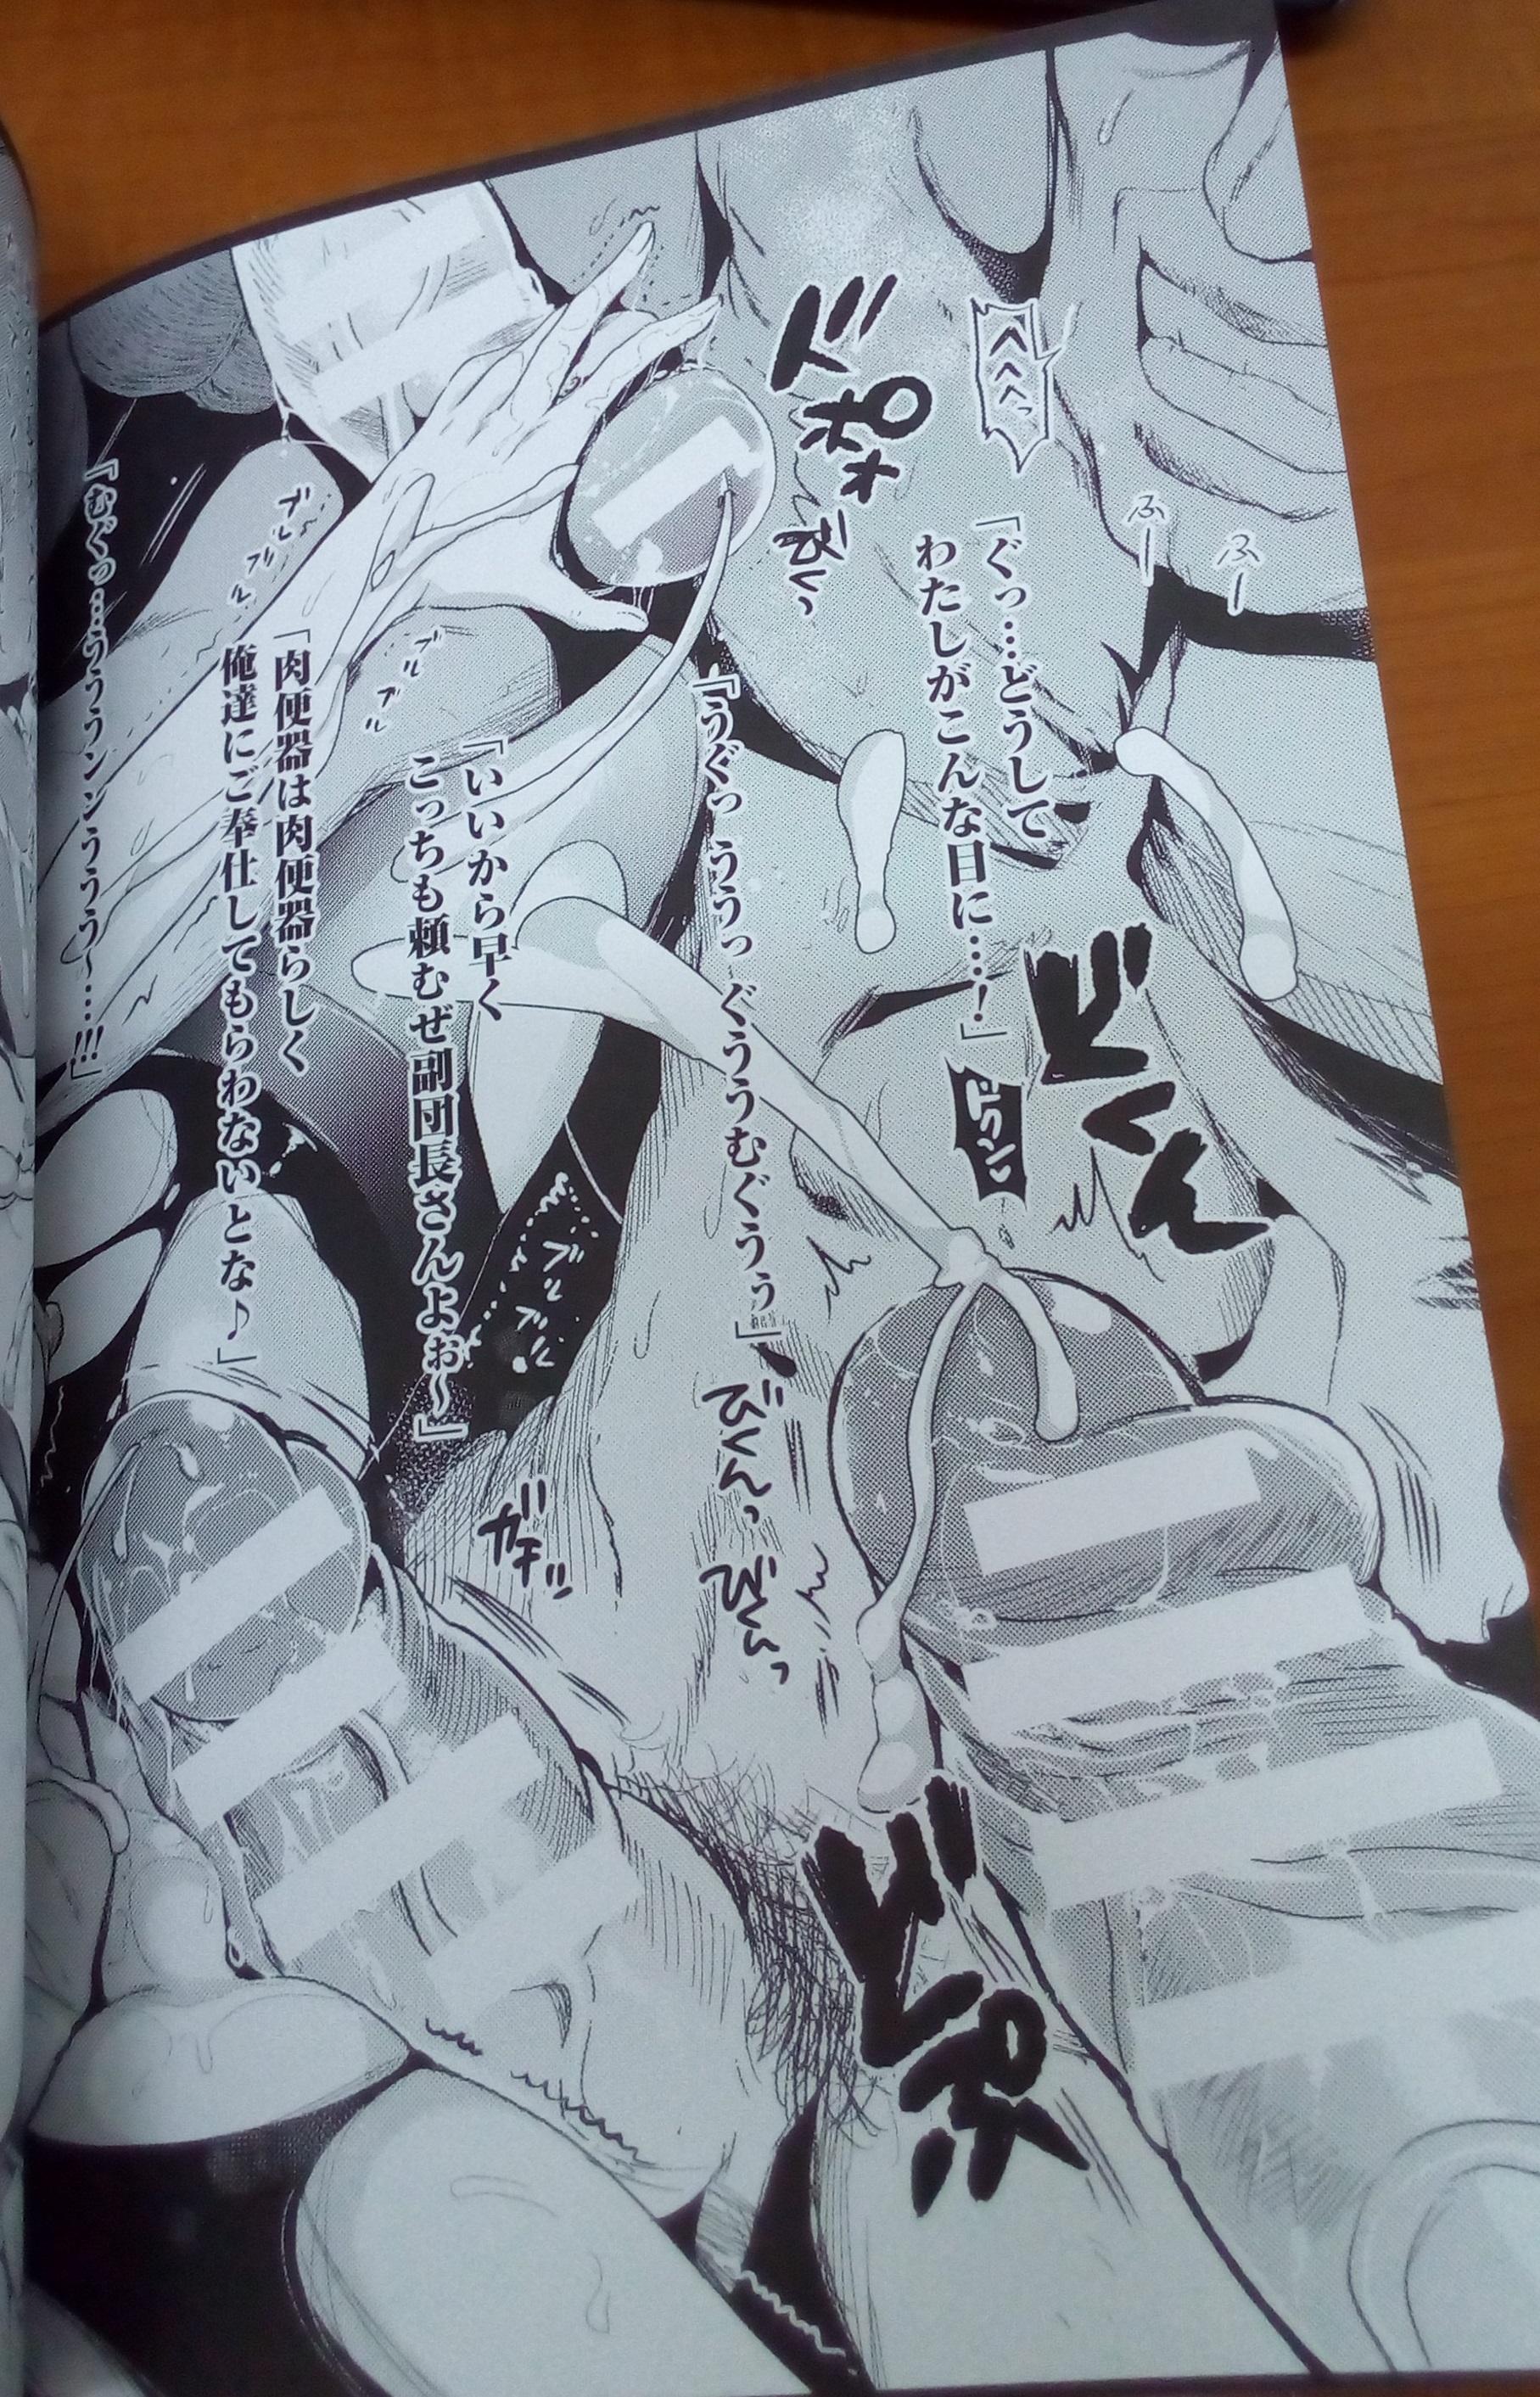 [Erect Sawaru] Shinkyoku no Grimoire III -PANDRA saga 2nd story-  Append book [Photoed] 43